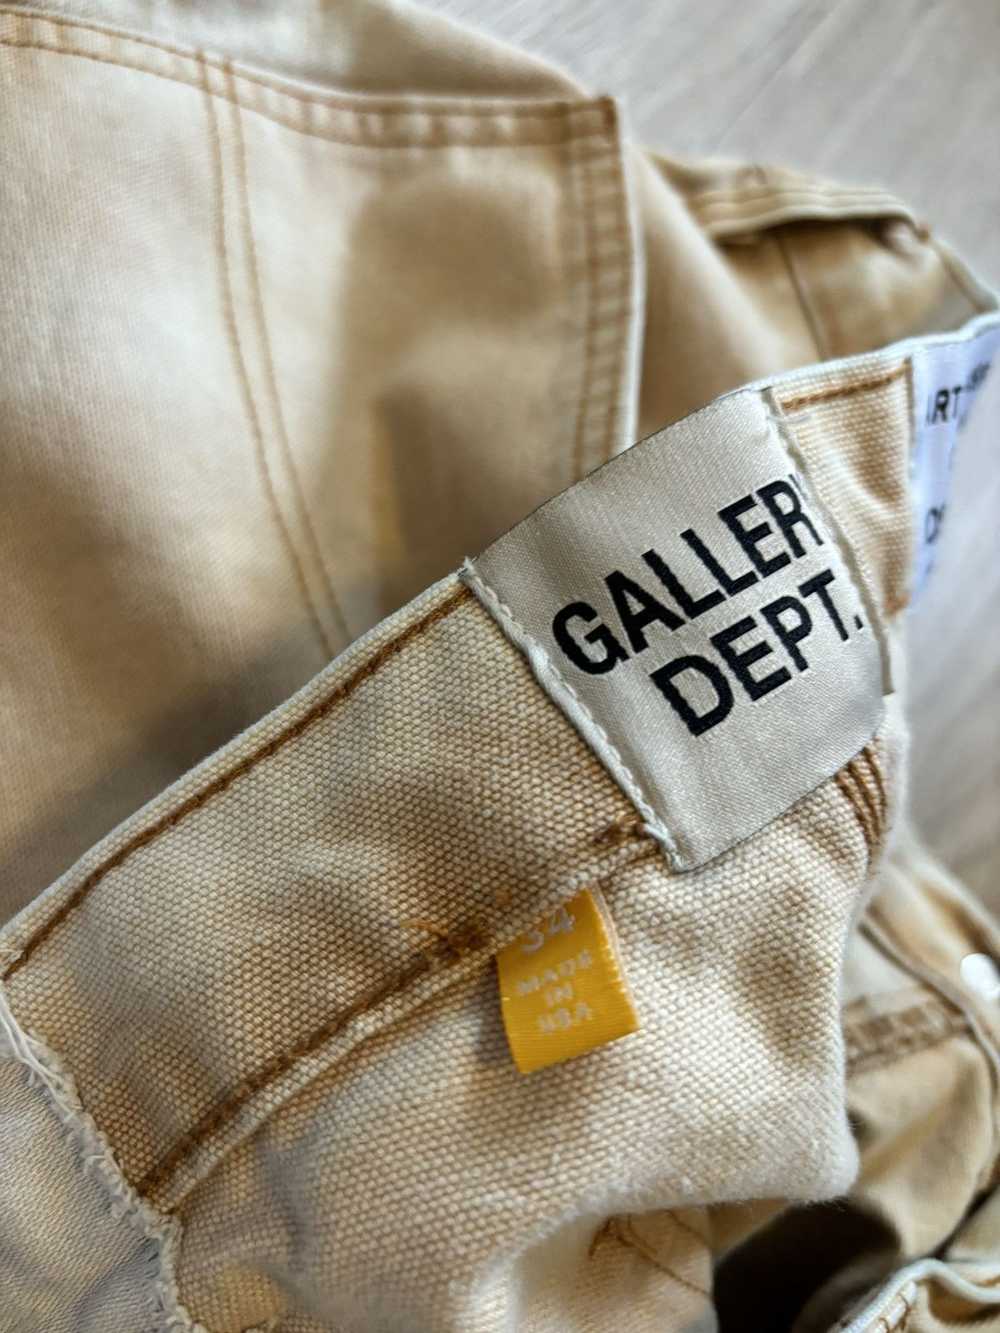 Gallery Dept. Gallery Dept. carpenter shorts - image 5